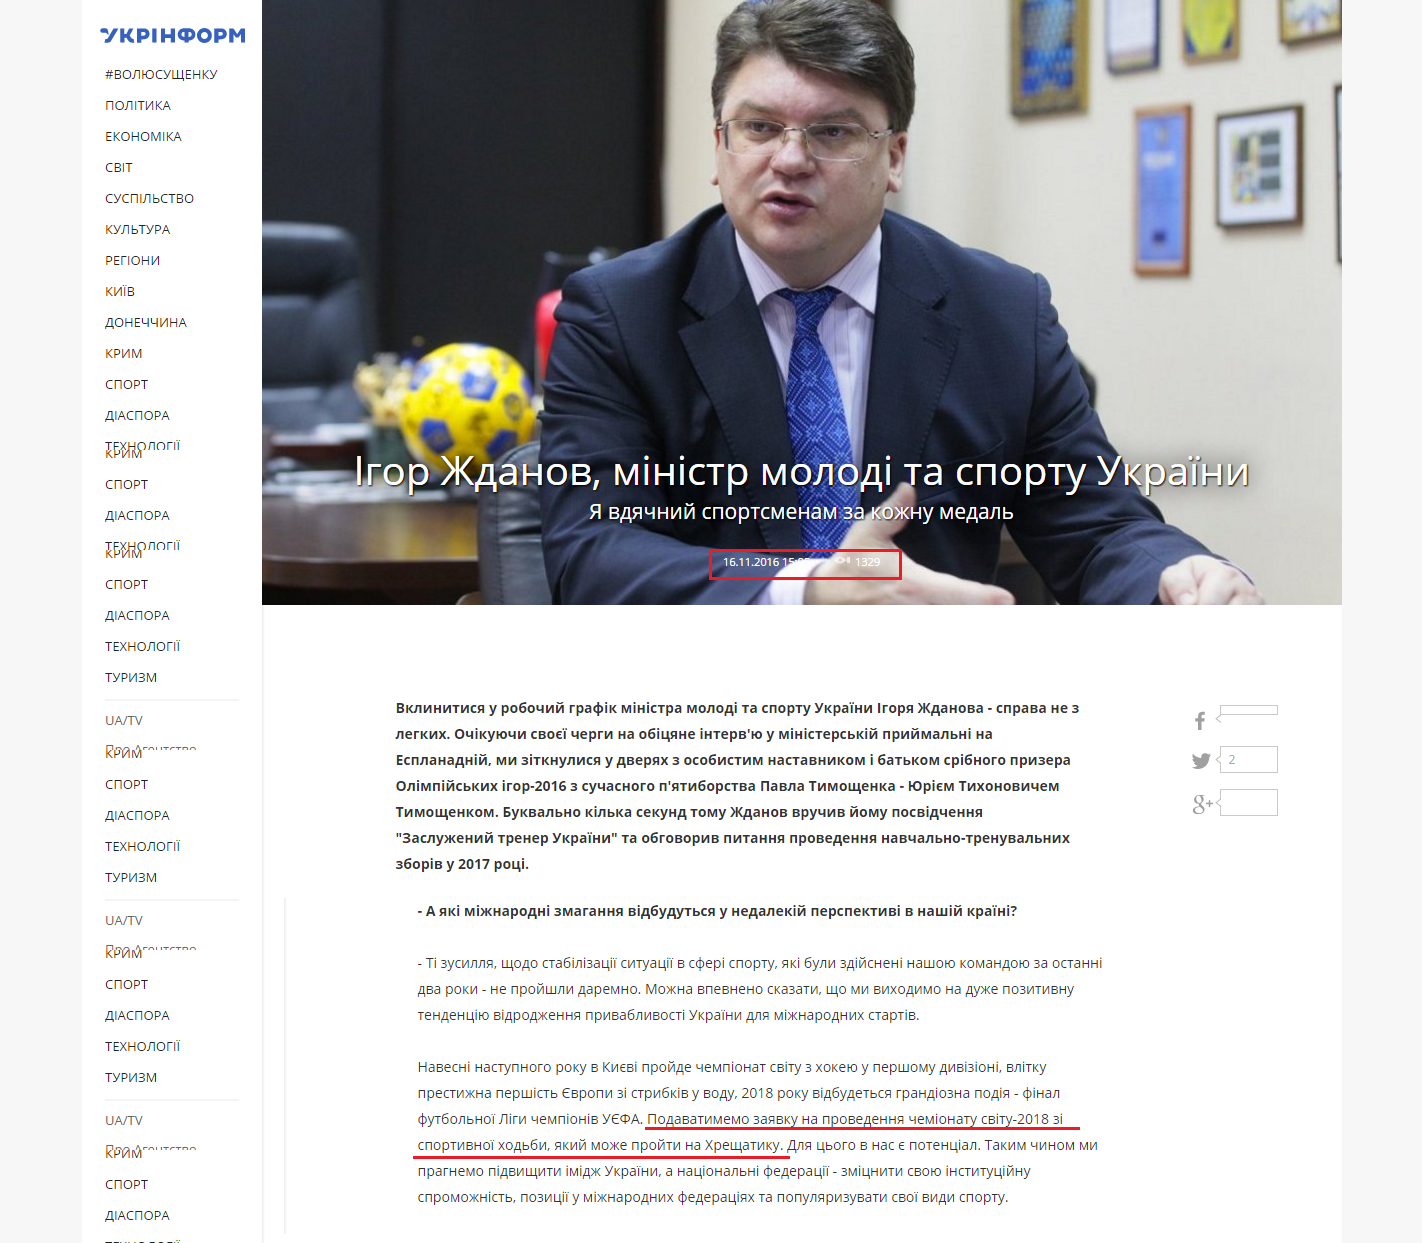 http://www.ukrinform.ua/rubric-sport/2121563-igor-zdanov-ministr-molodi-ta-sportu-ukraini.html